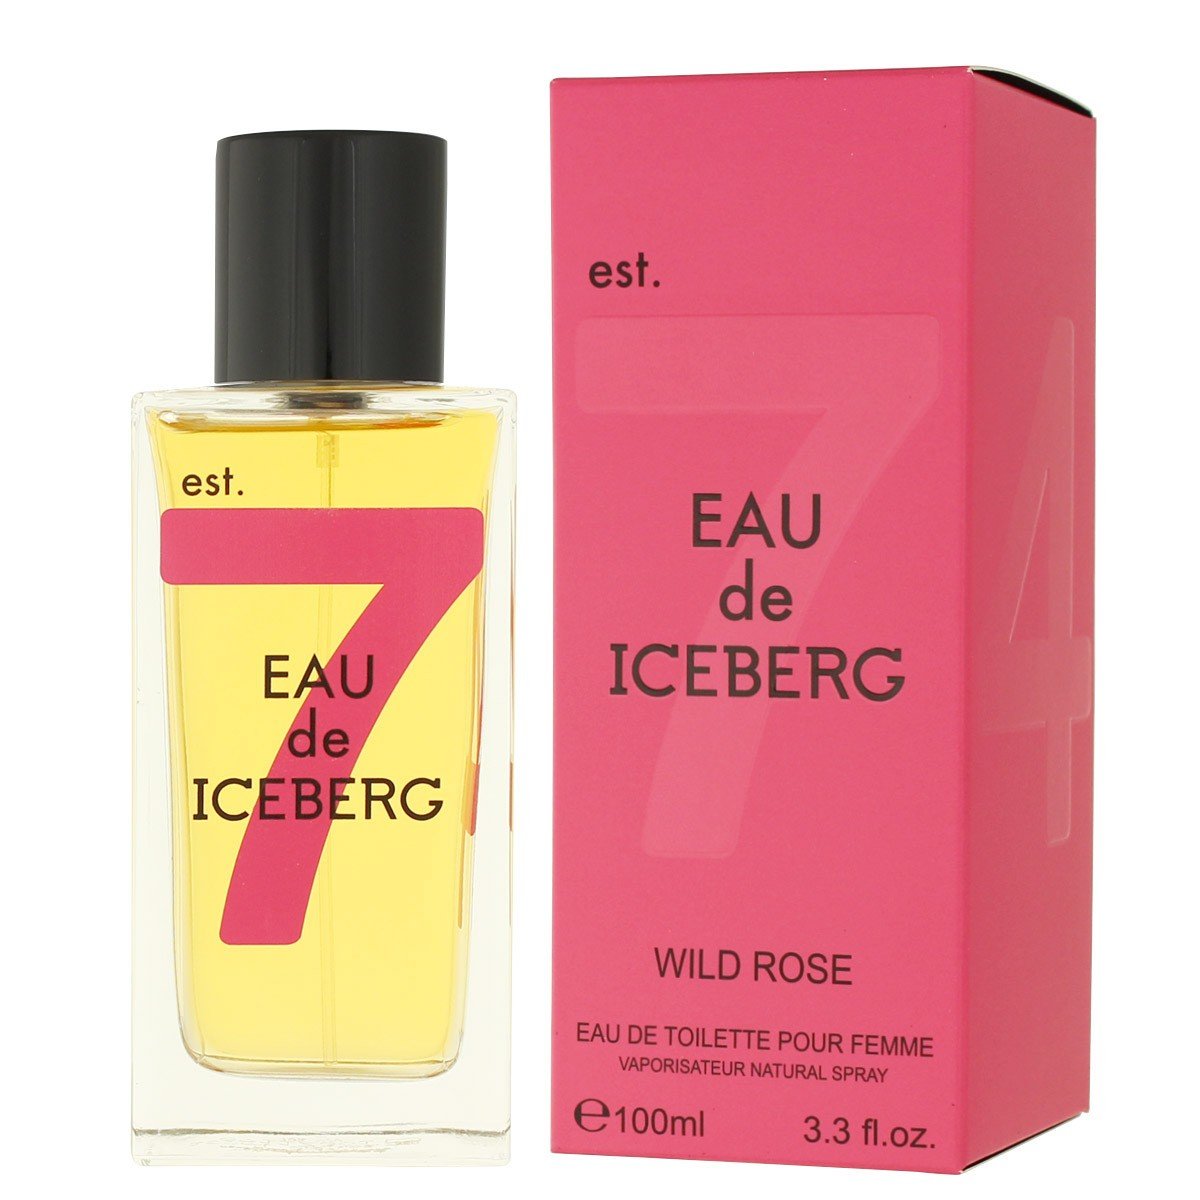 Planet Perfume - Amazing Deals On Iceberg Fragrances